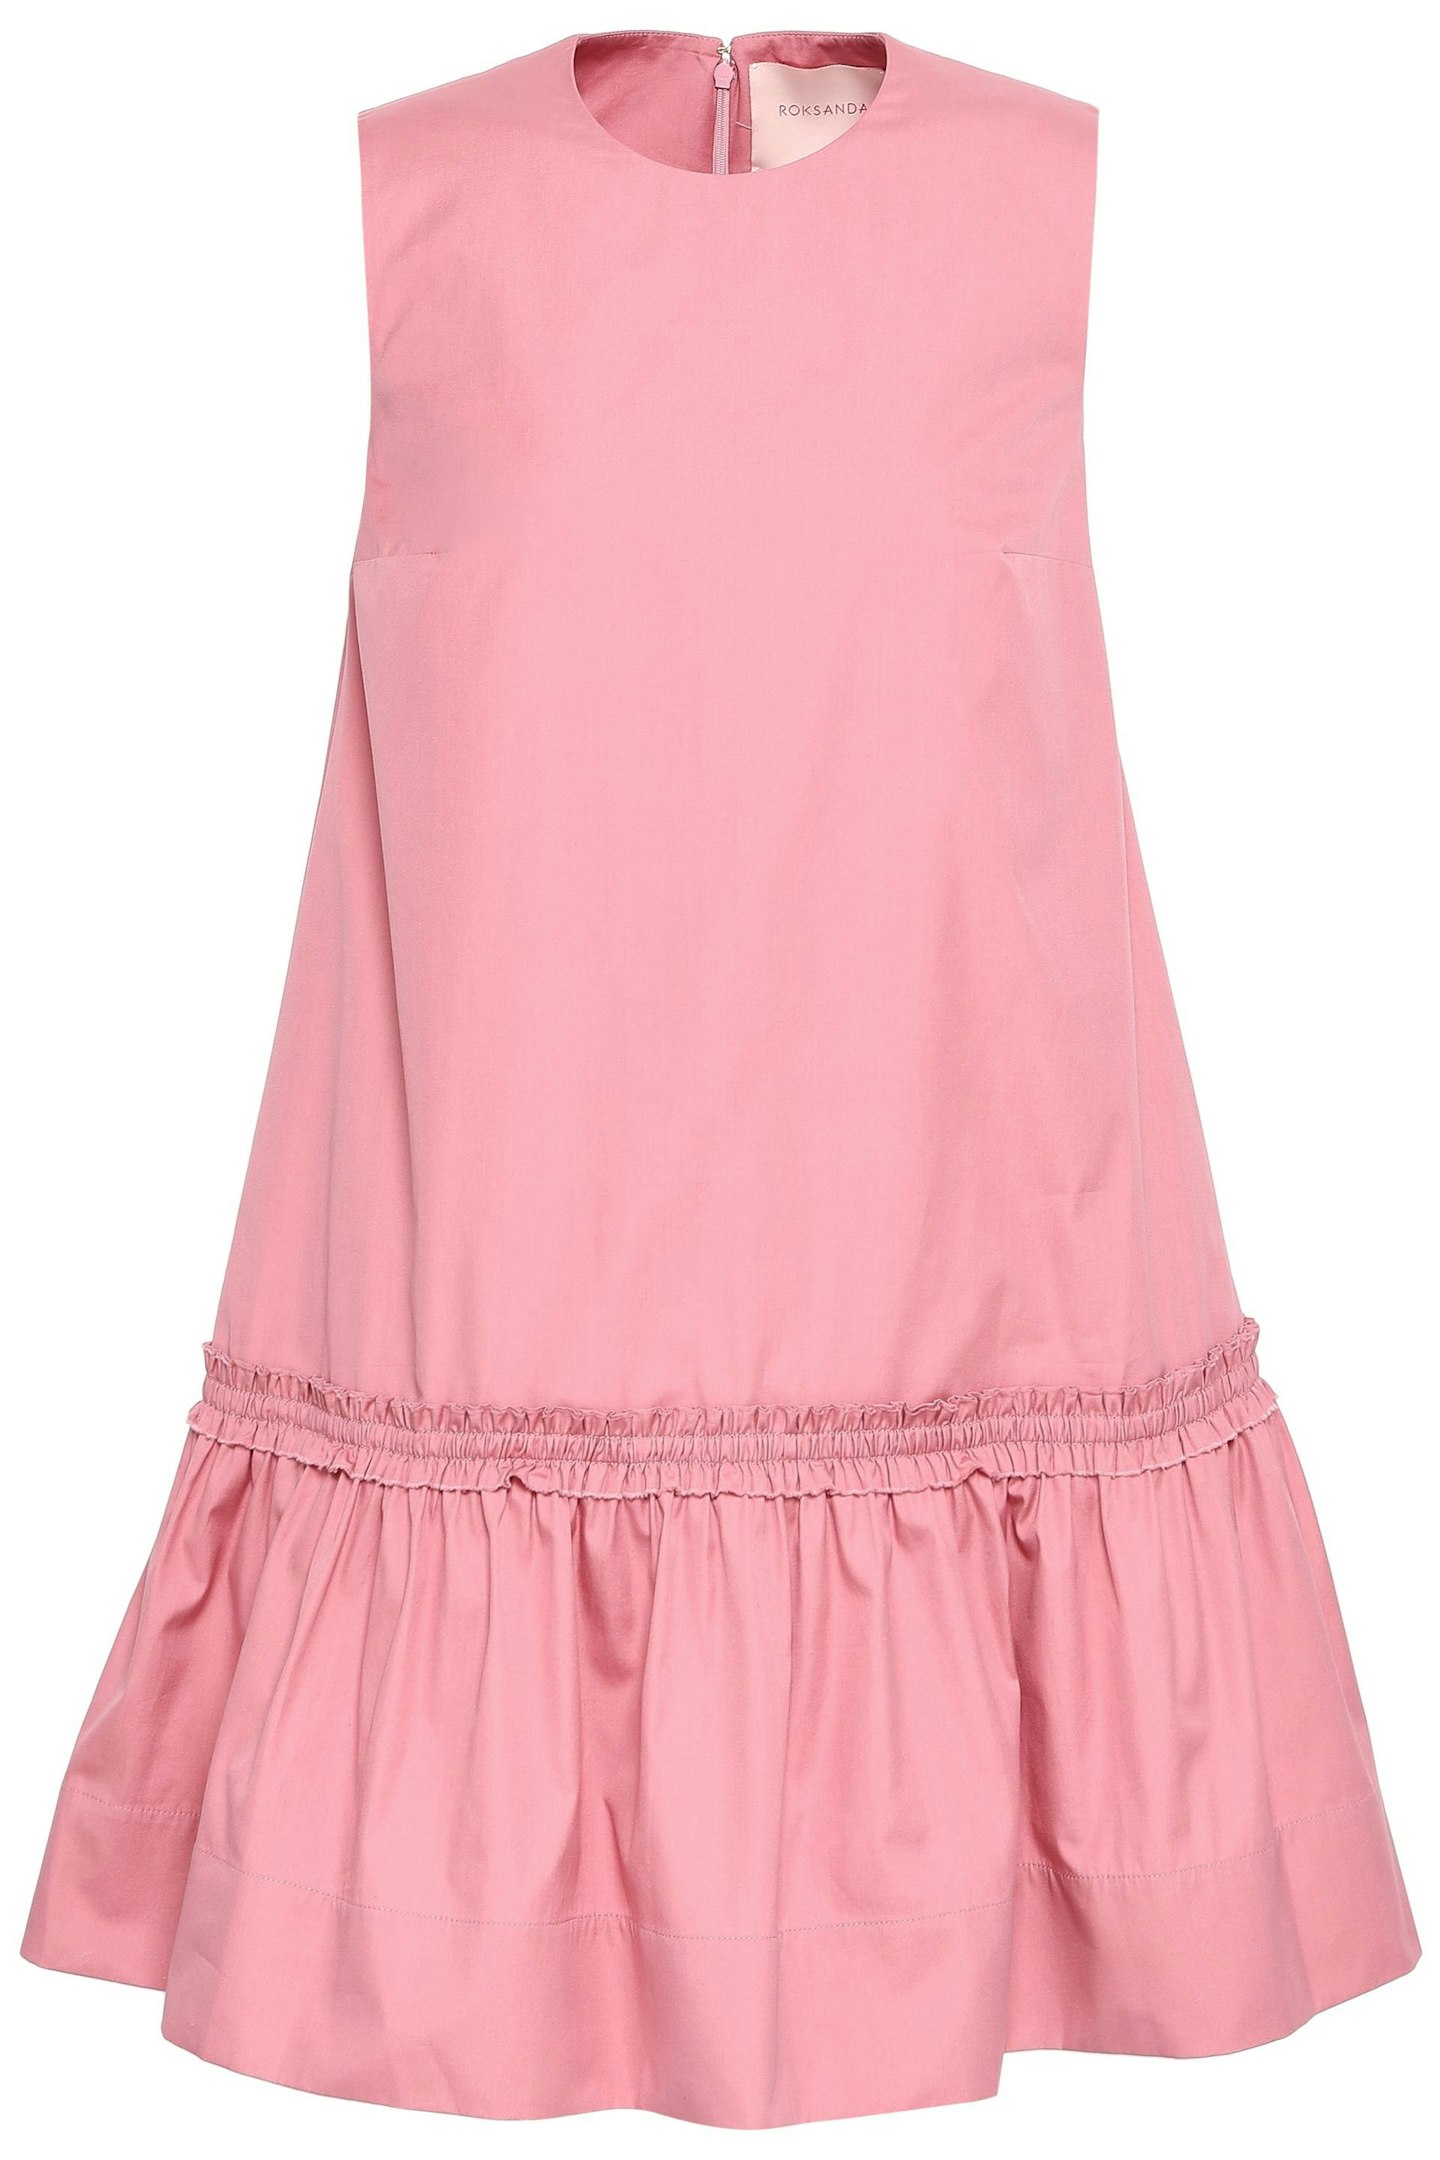 Roksanda, Pink Oversized Dress, £415